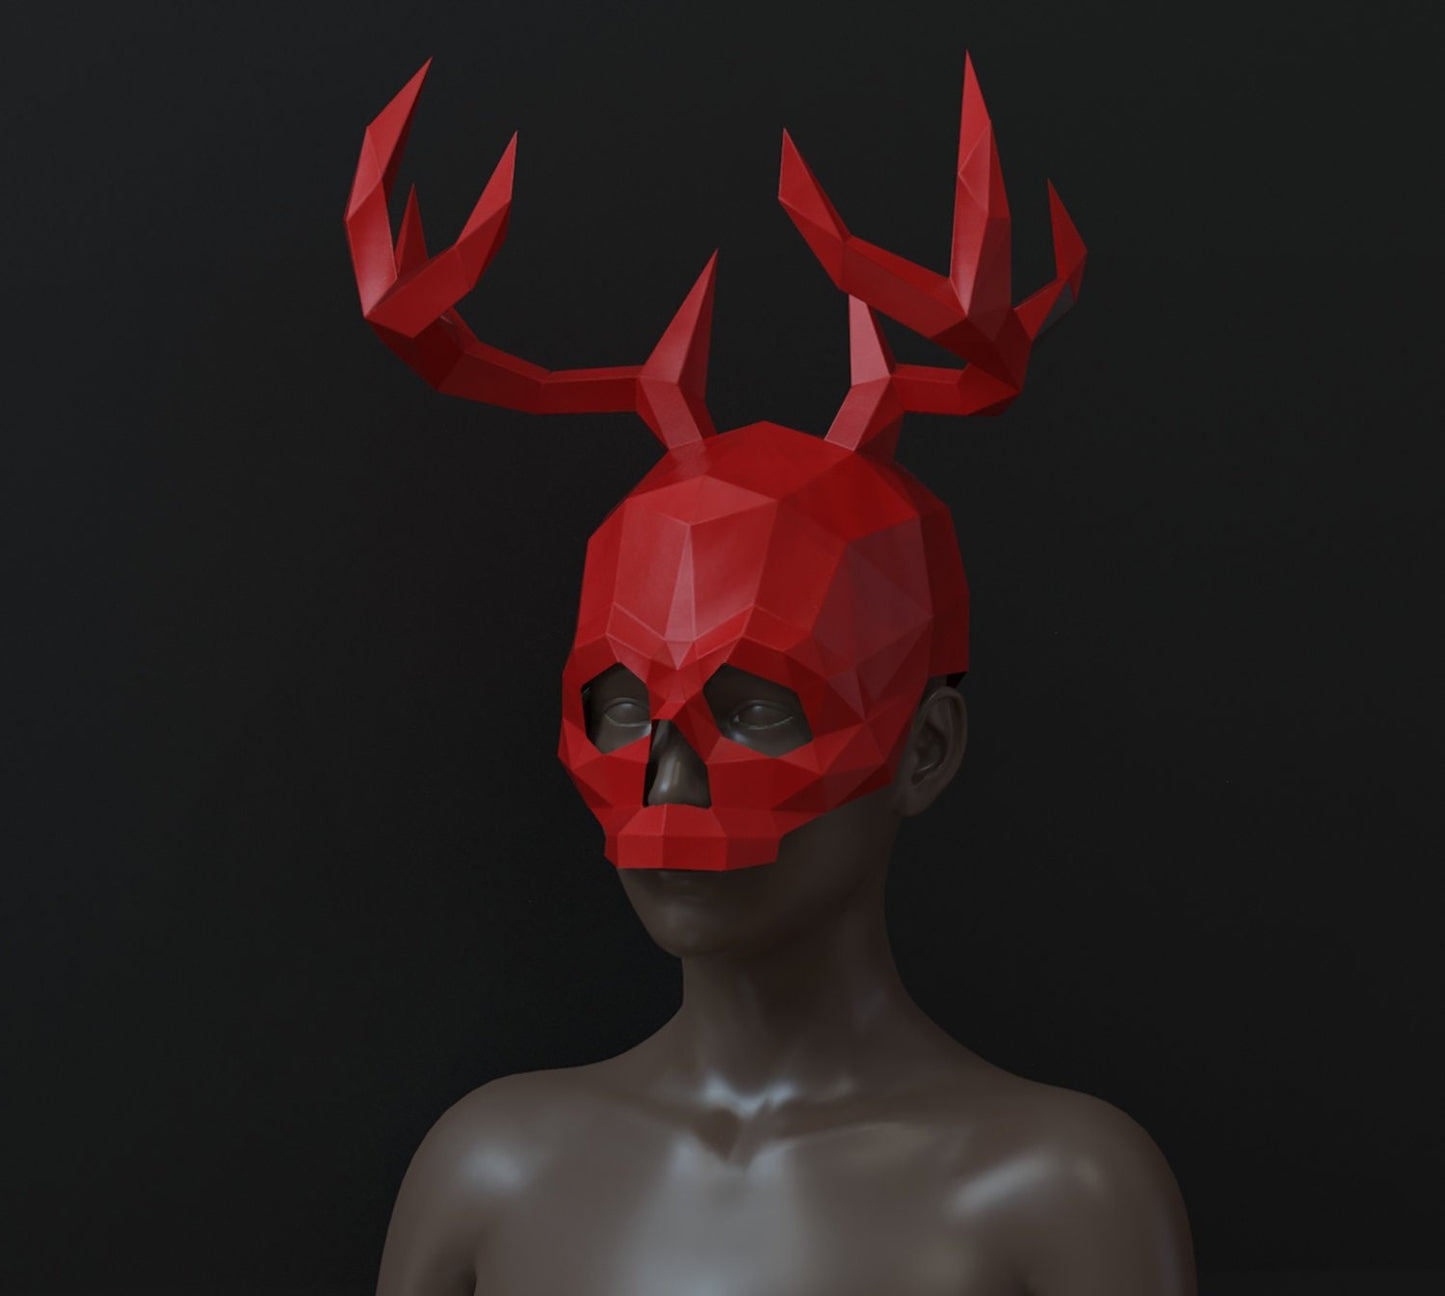 Skull with Horns Mask